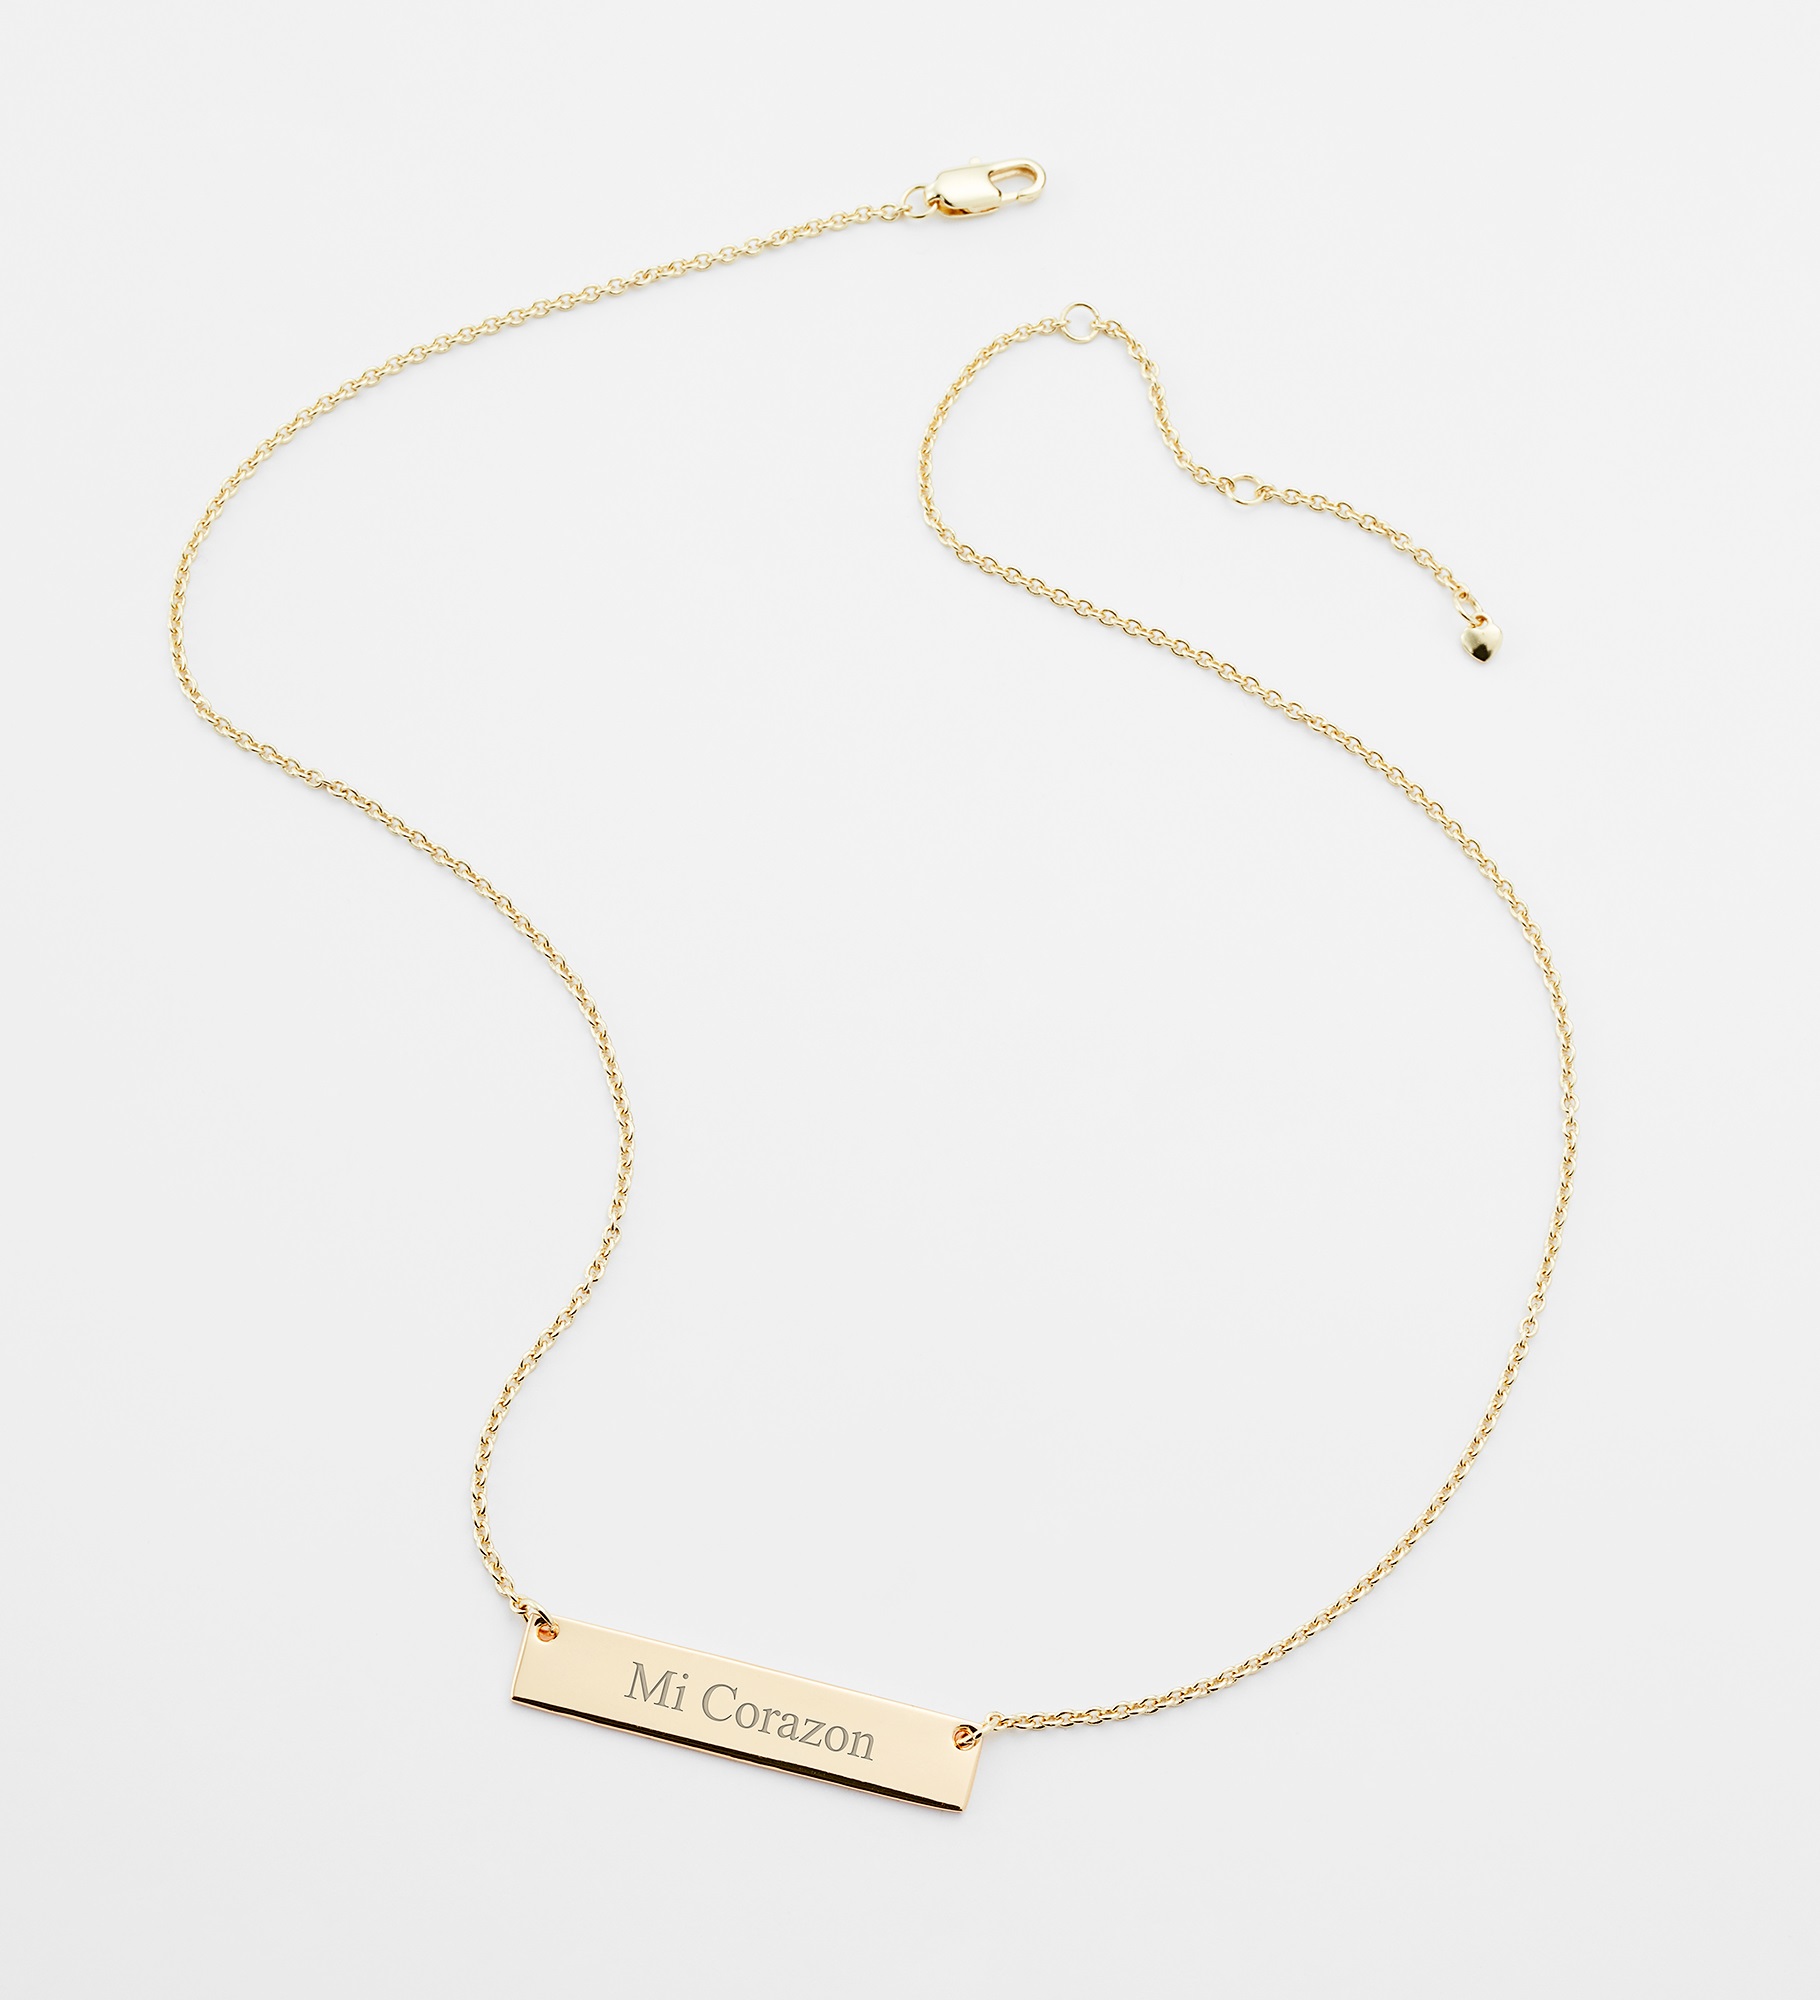  Engraved Gold Bar Necklace